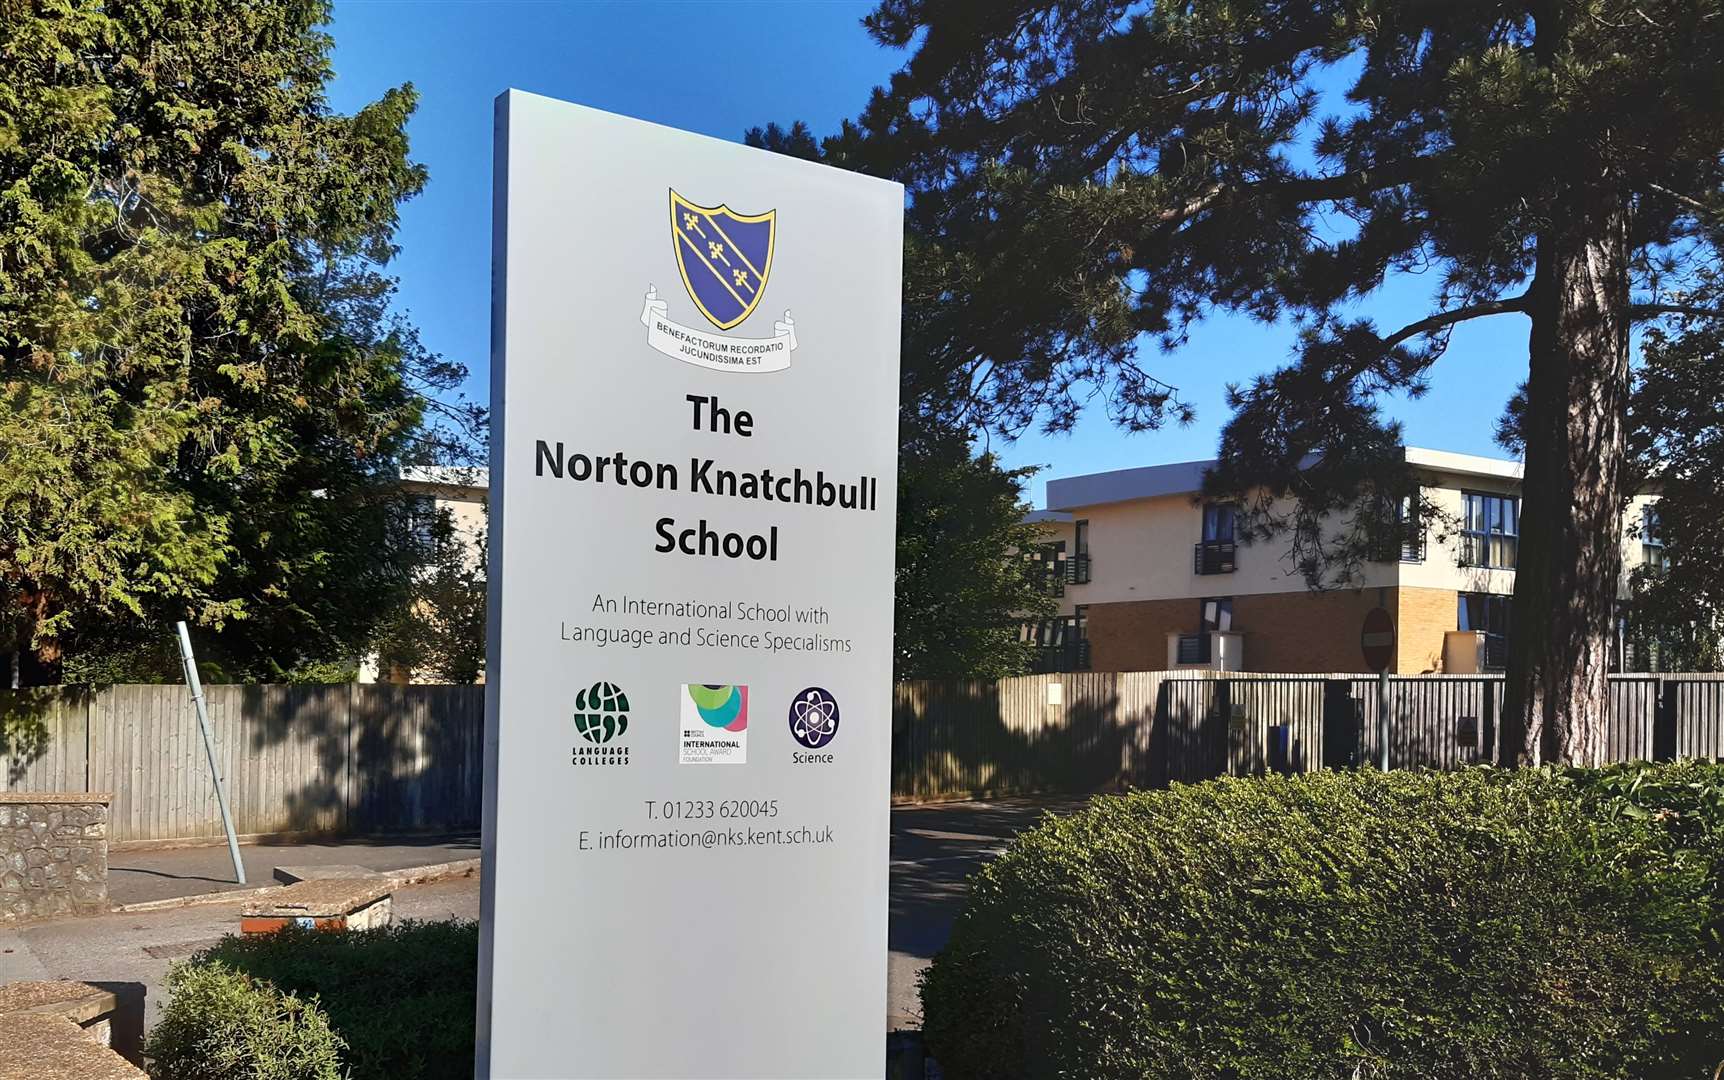 The Norton Knatchbull School in Ashford